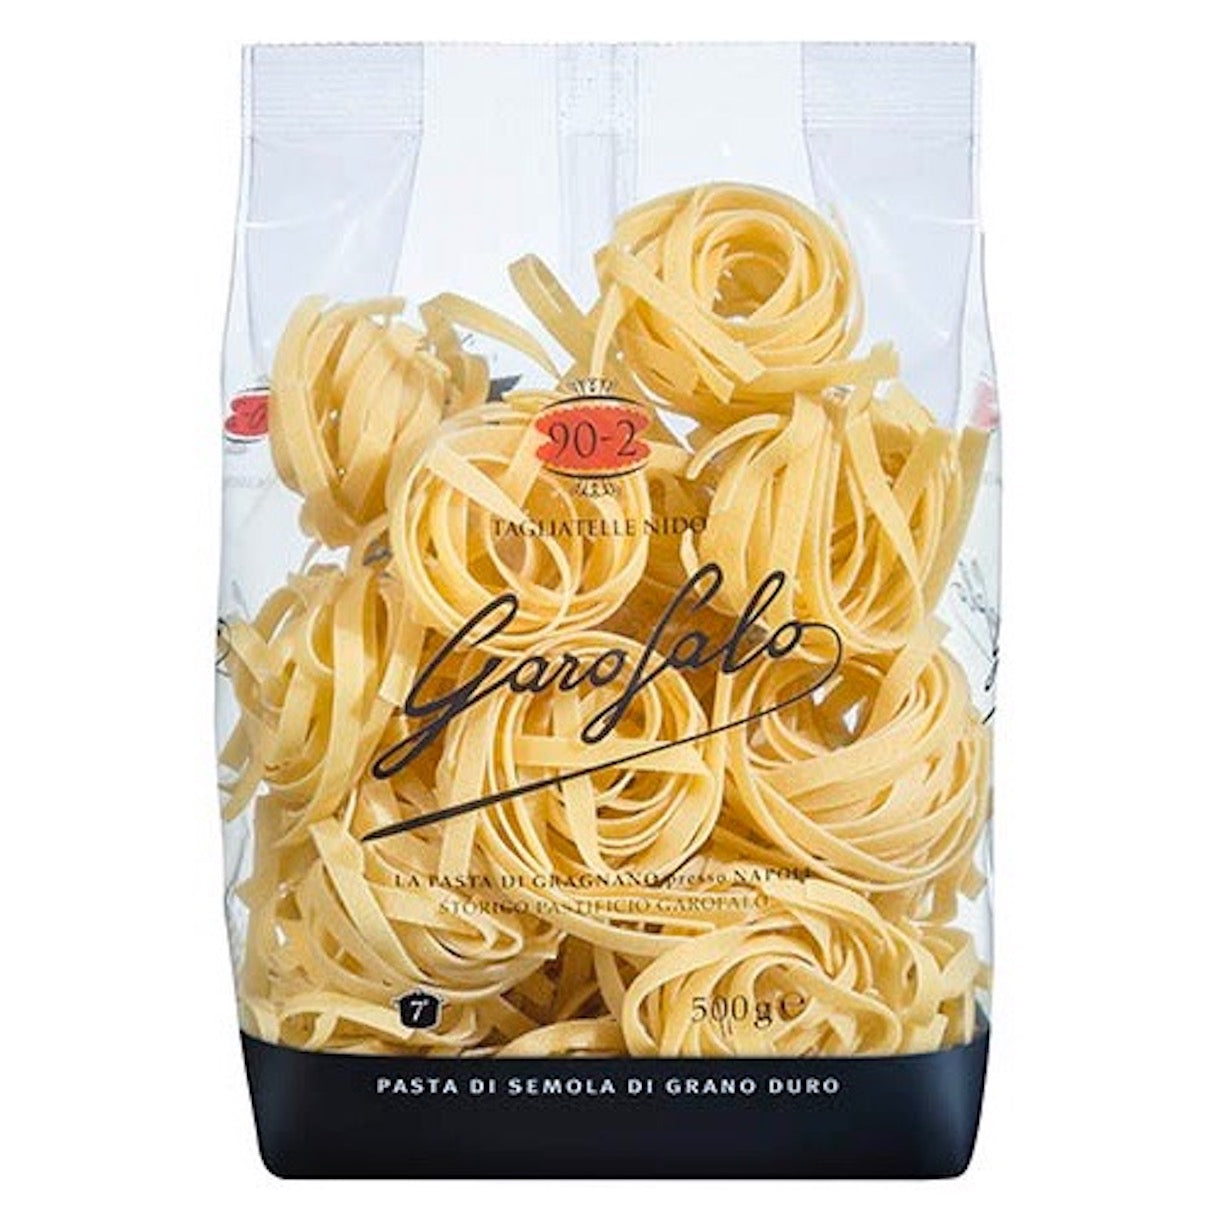 tagliatelle-nido-pasta-garofalo-singapore-online-delivery-grocery-thenewgrocer